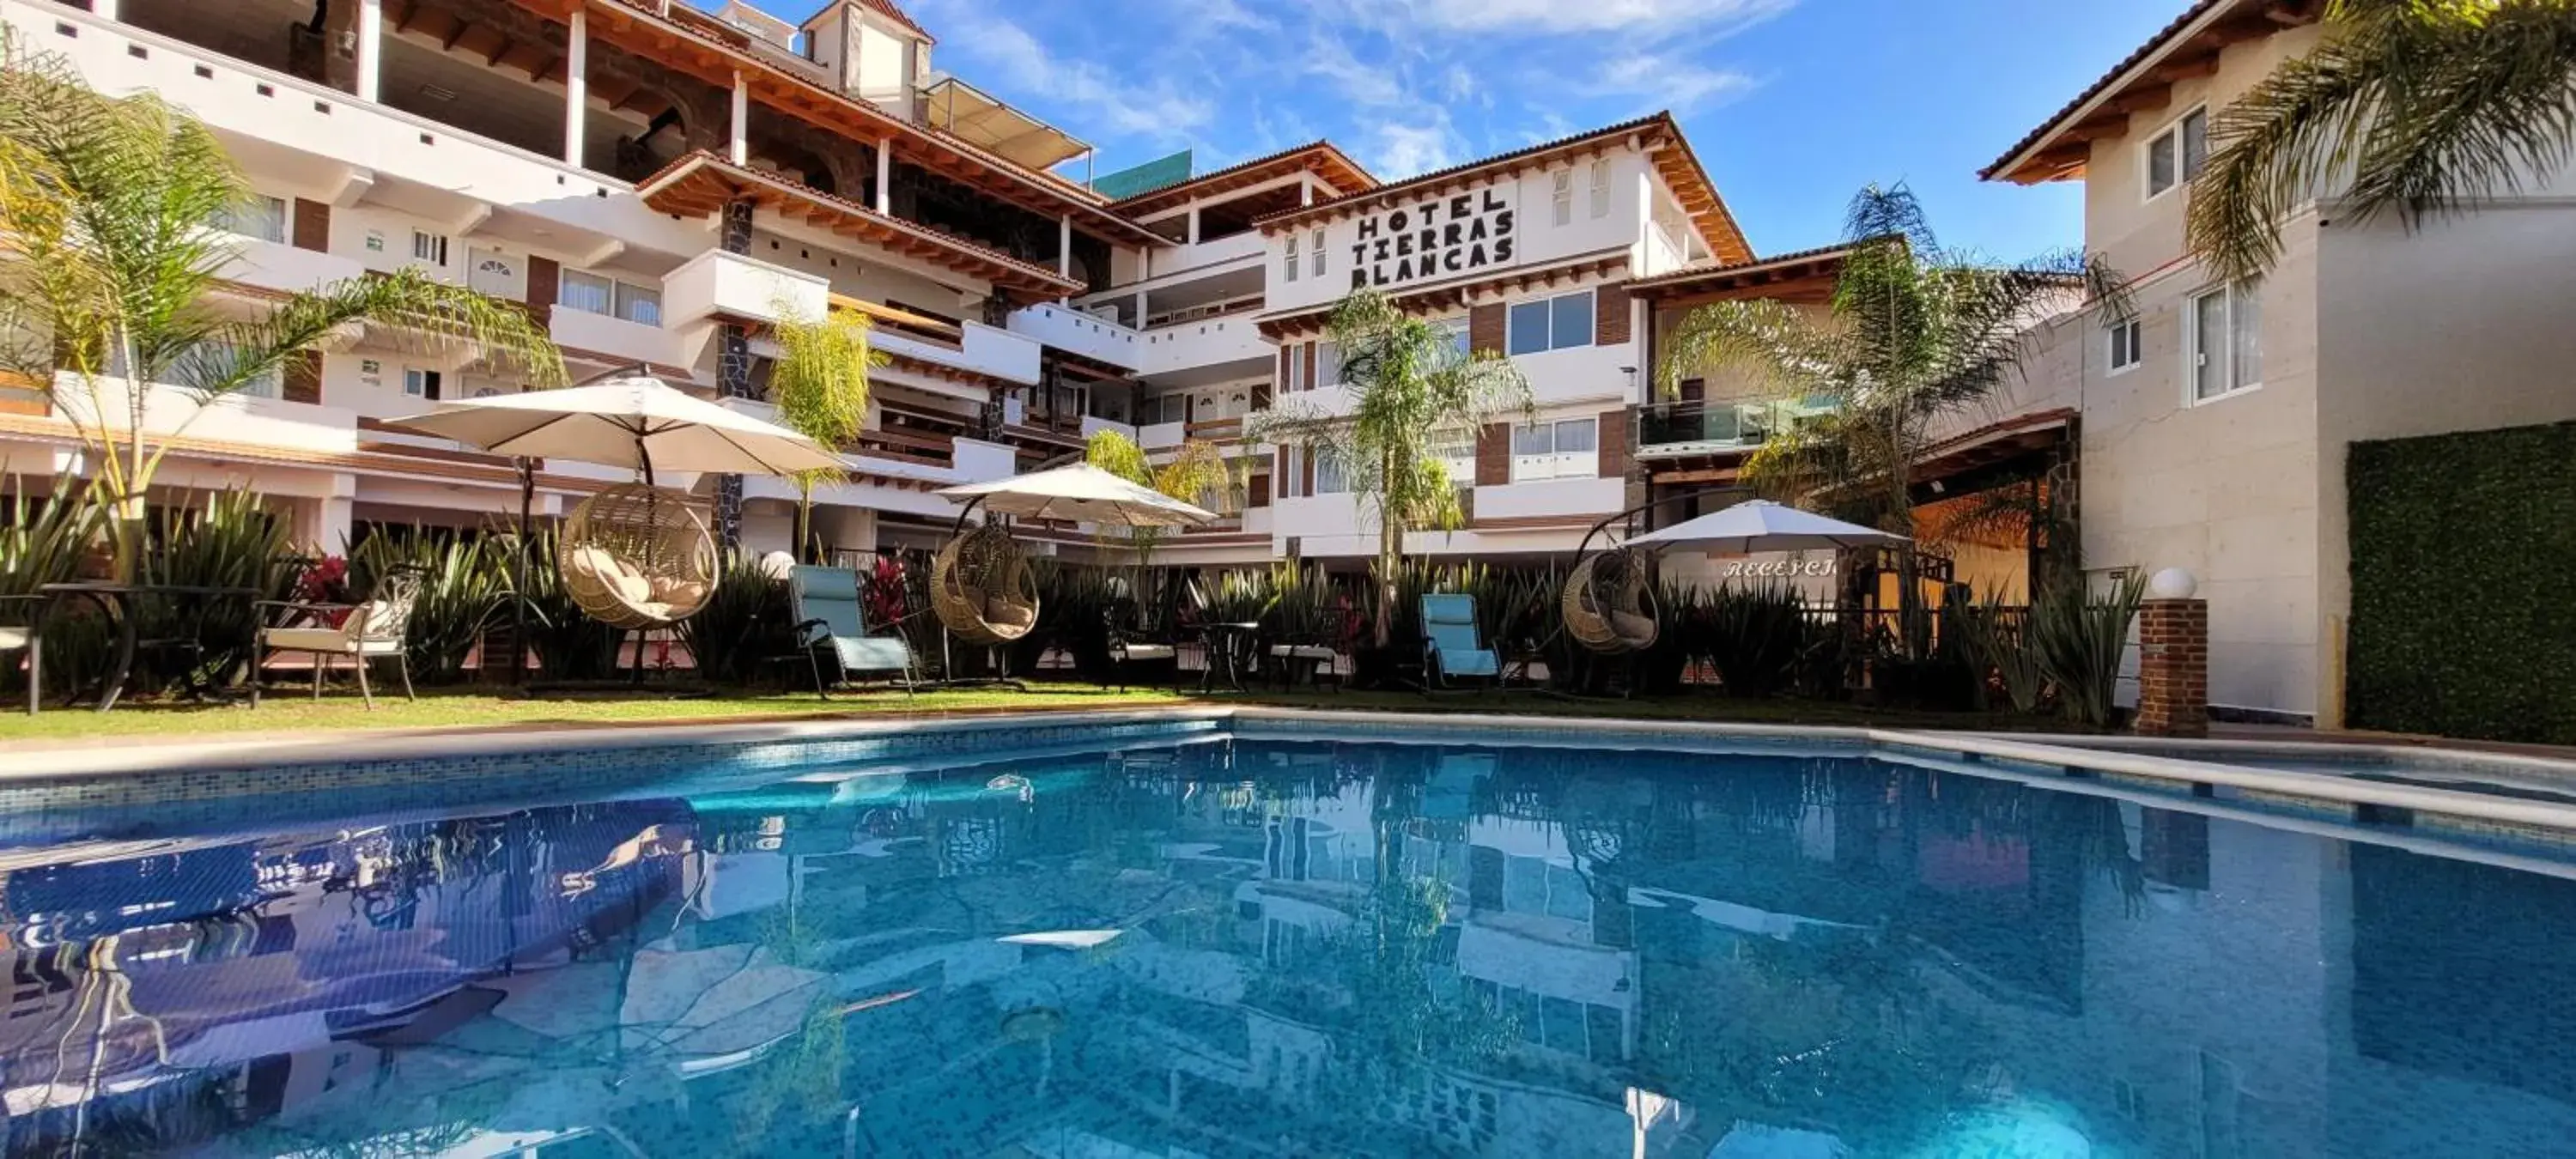 Property building, Swimming Pool in Hotel Tierras Blancas